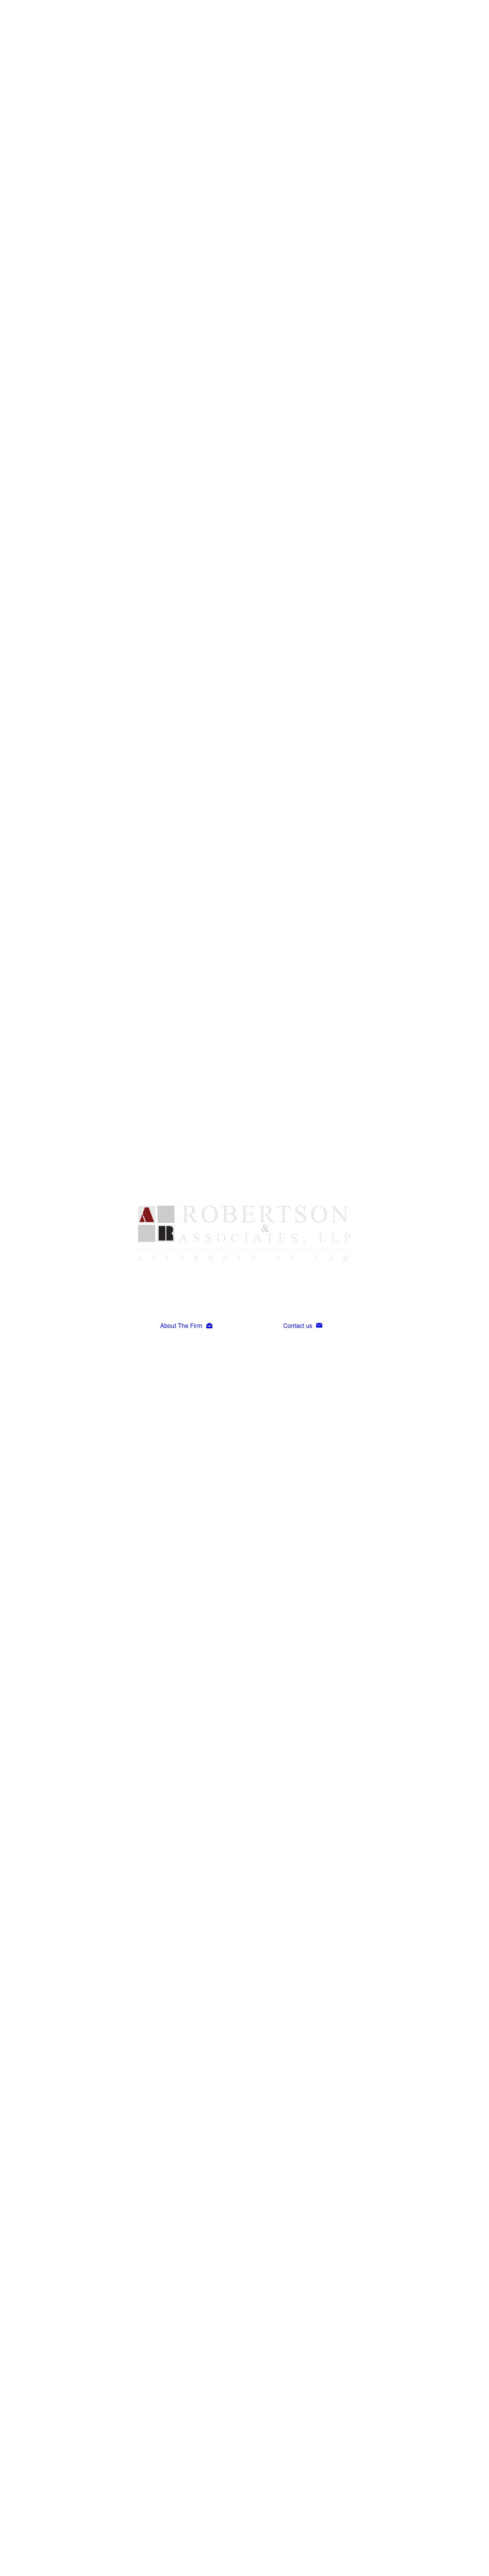 Robertson & Associates LLP - Westlake Village CA Lawyers